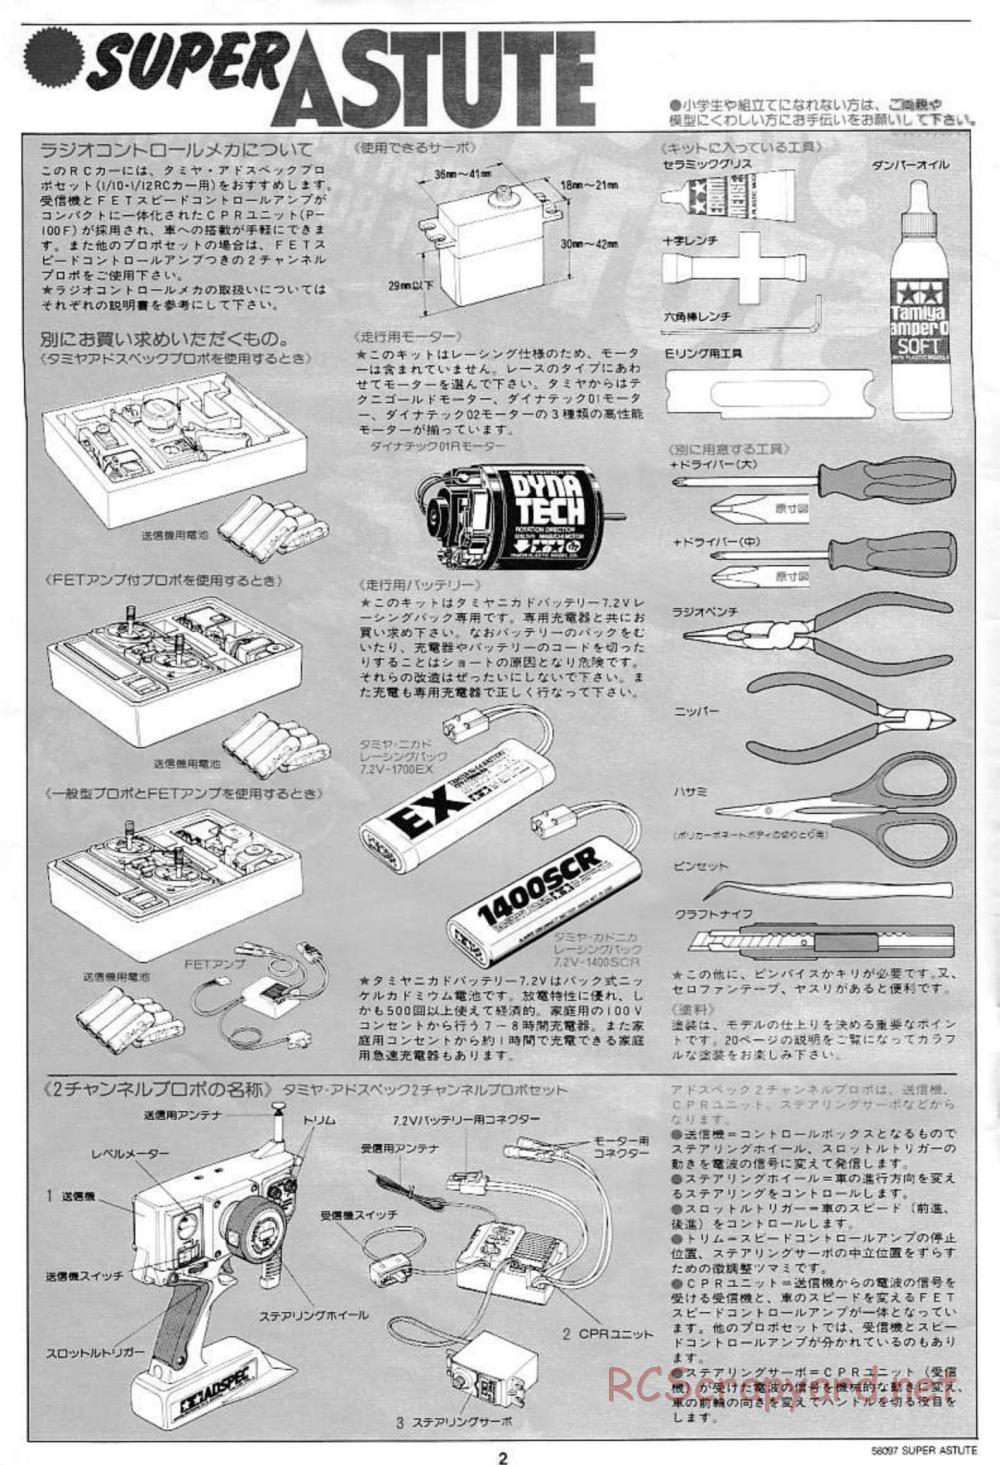 Tamiya - Super Astute - 58097 - Manual - Page 2